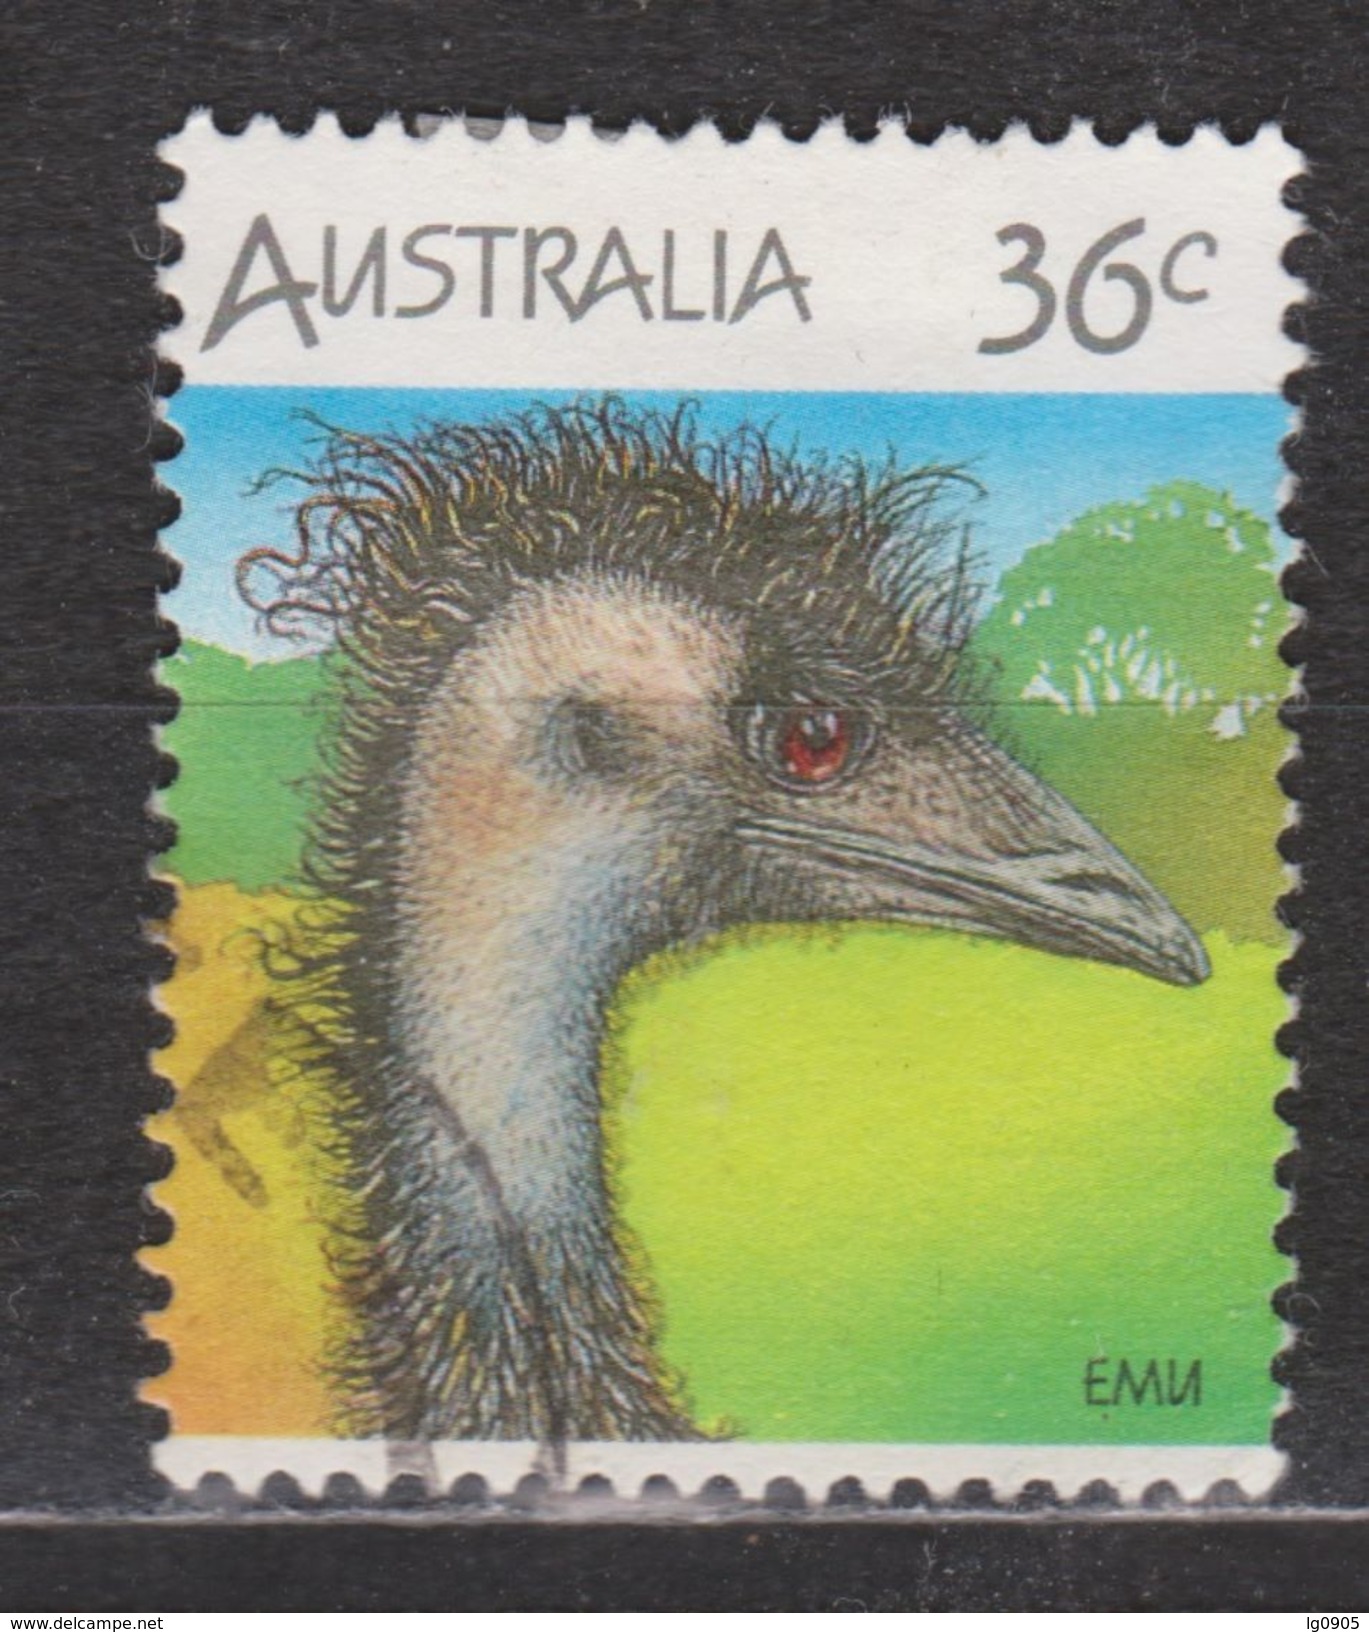 Australie, Australia Used ; Struisvogel Ostrich Autruche Avestruz Emu Emoe 1986 NOW MANY ANIMAL STAMPS FOR SALE - Struisvogels